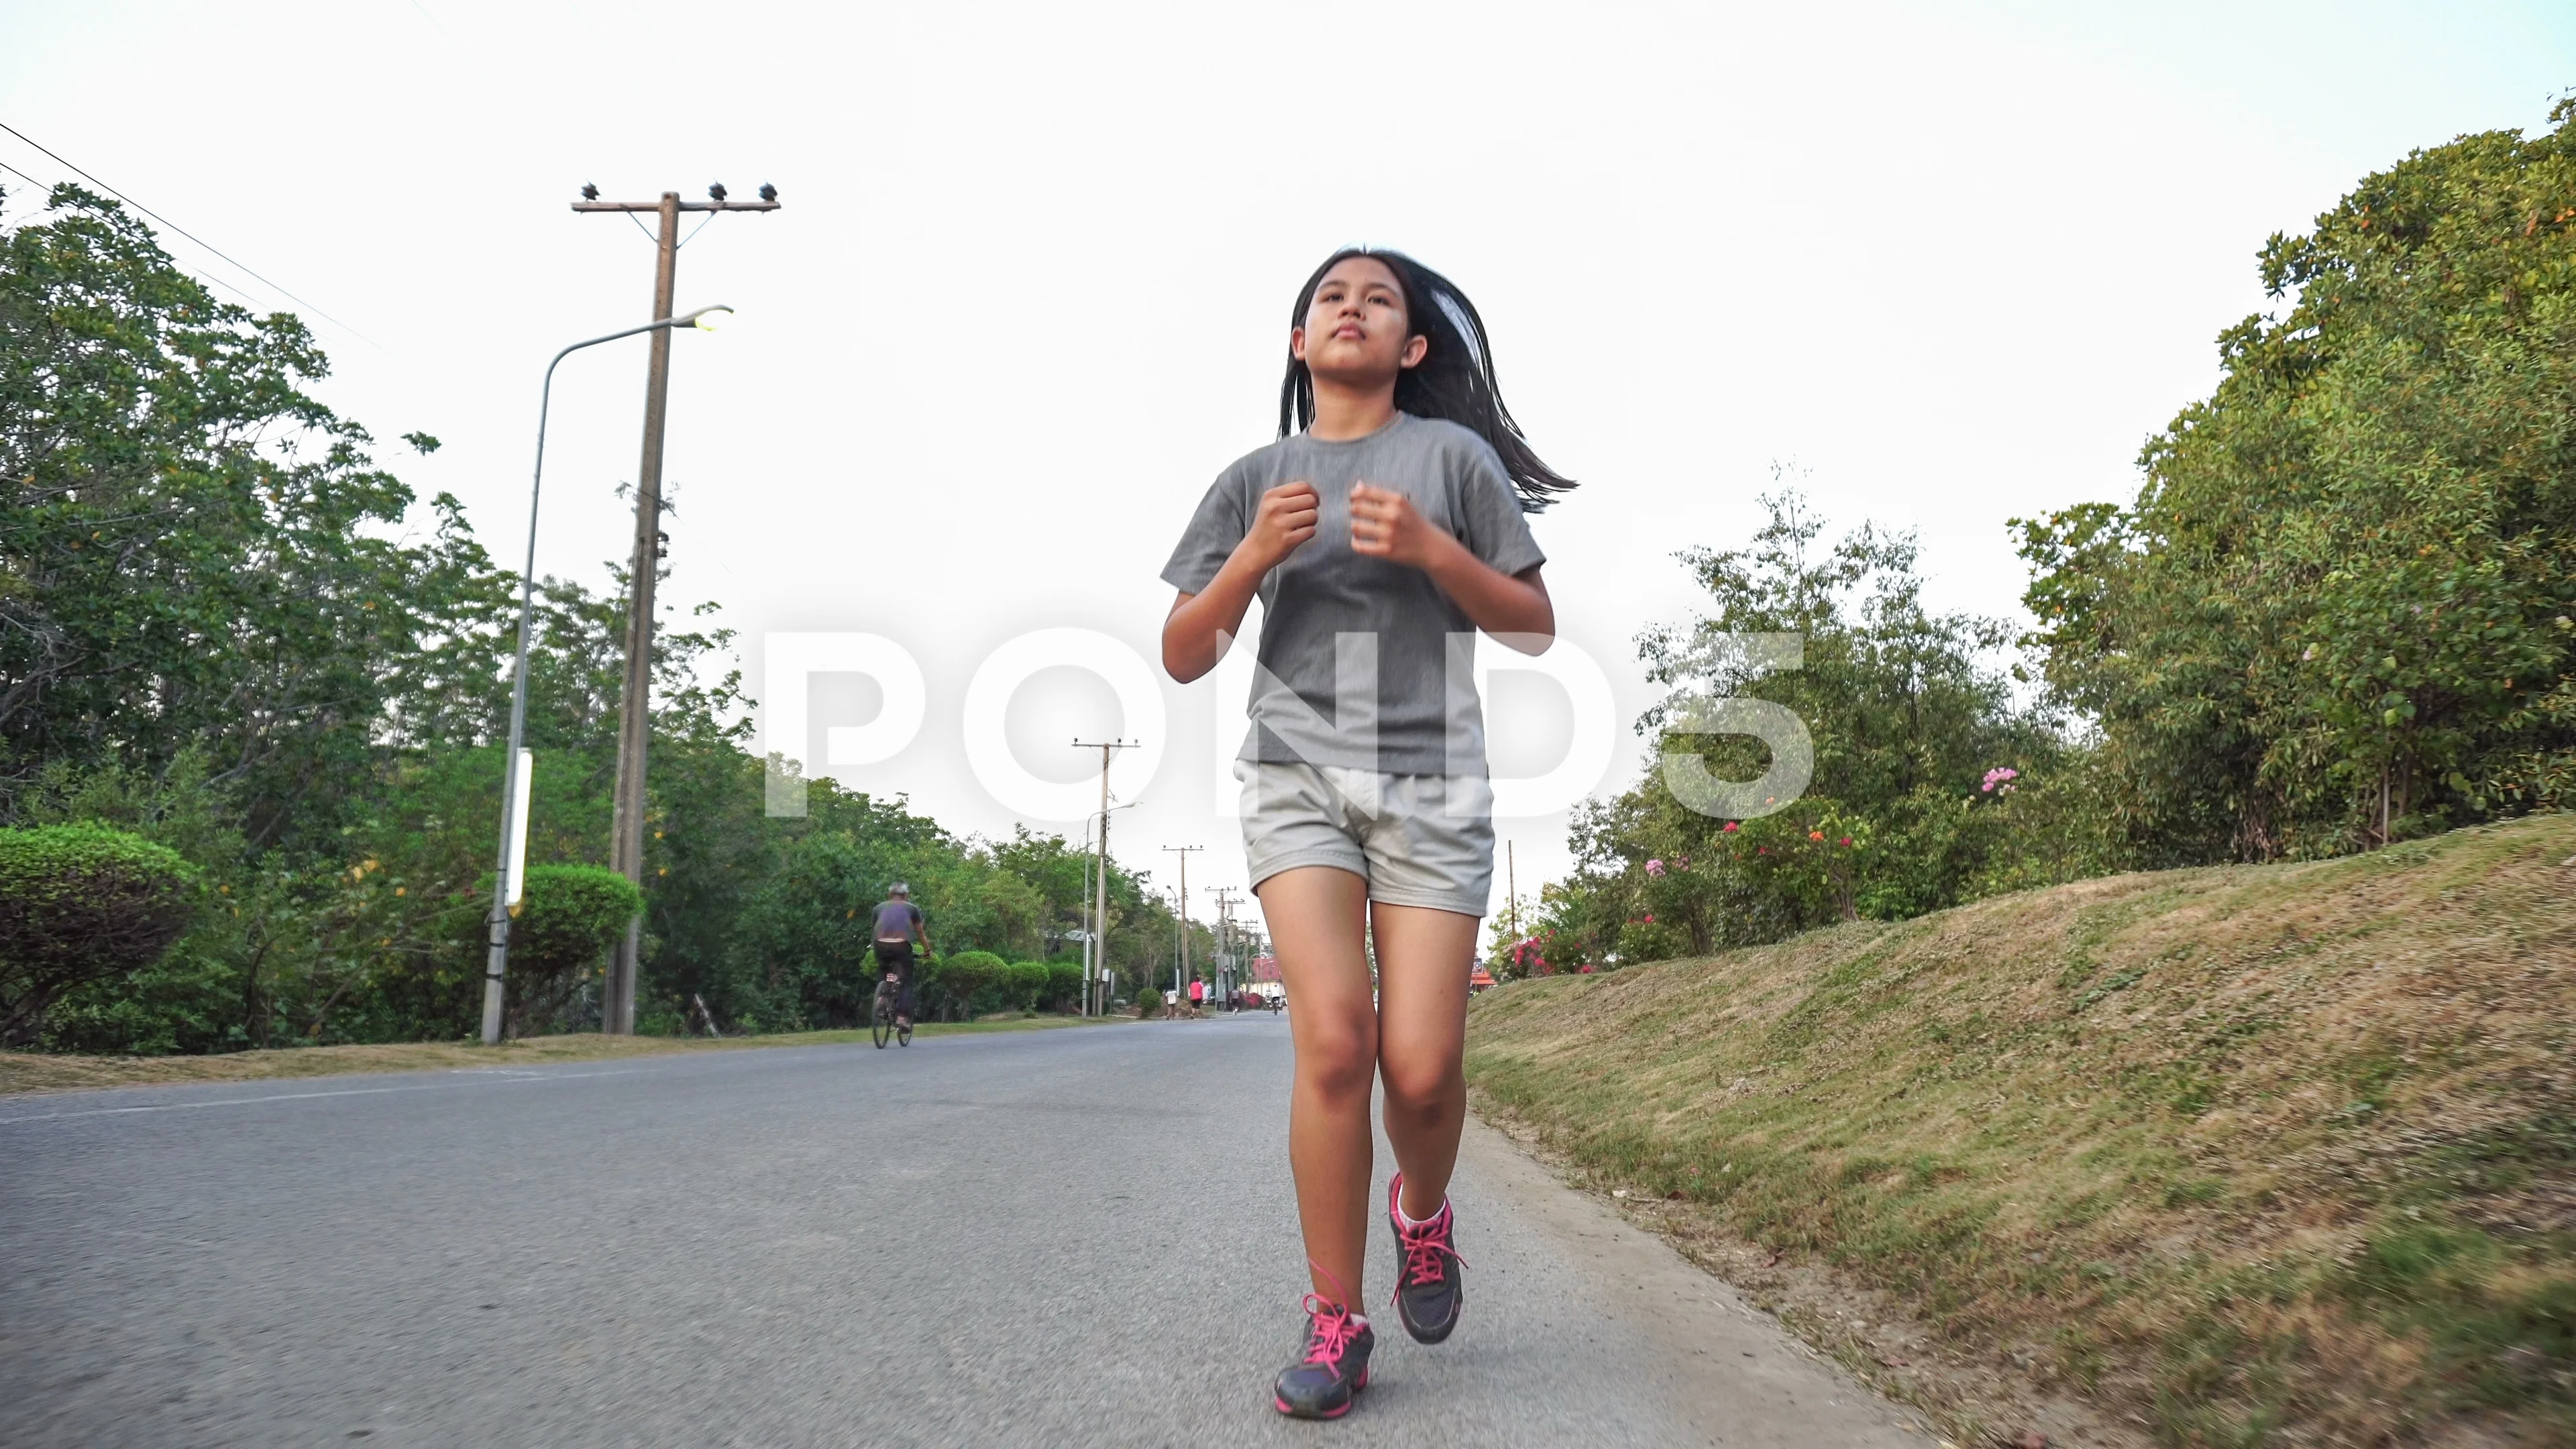 https://images.pond5.com/teenage-girls-running-park-exercising-footage-074859998_prevstill.jpeg